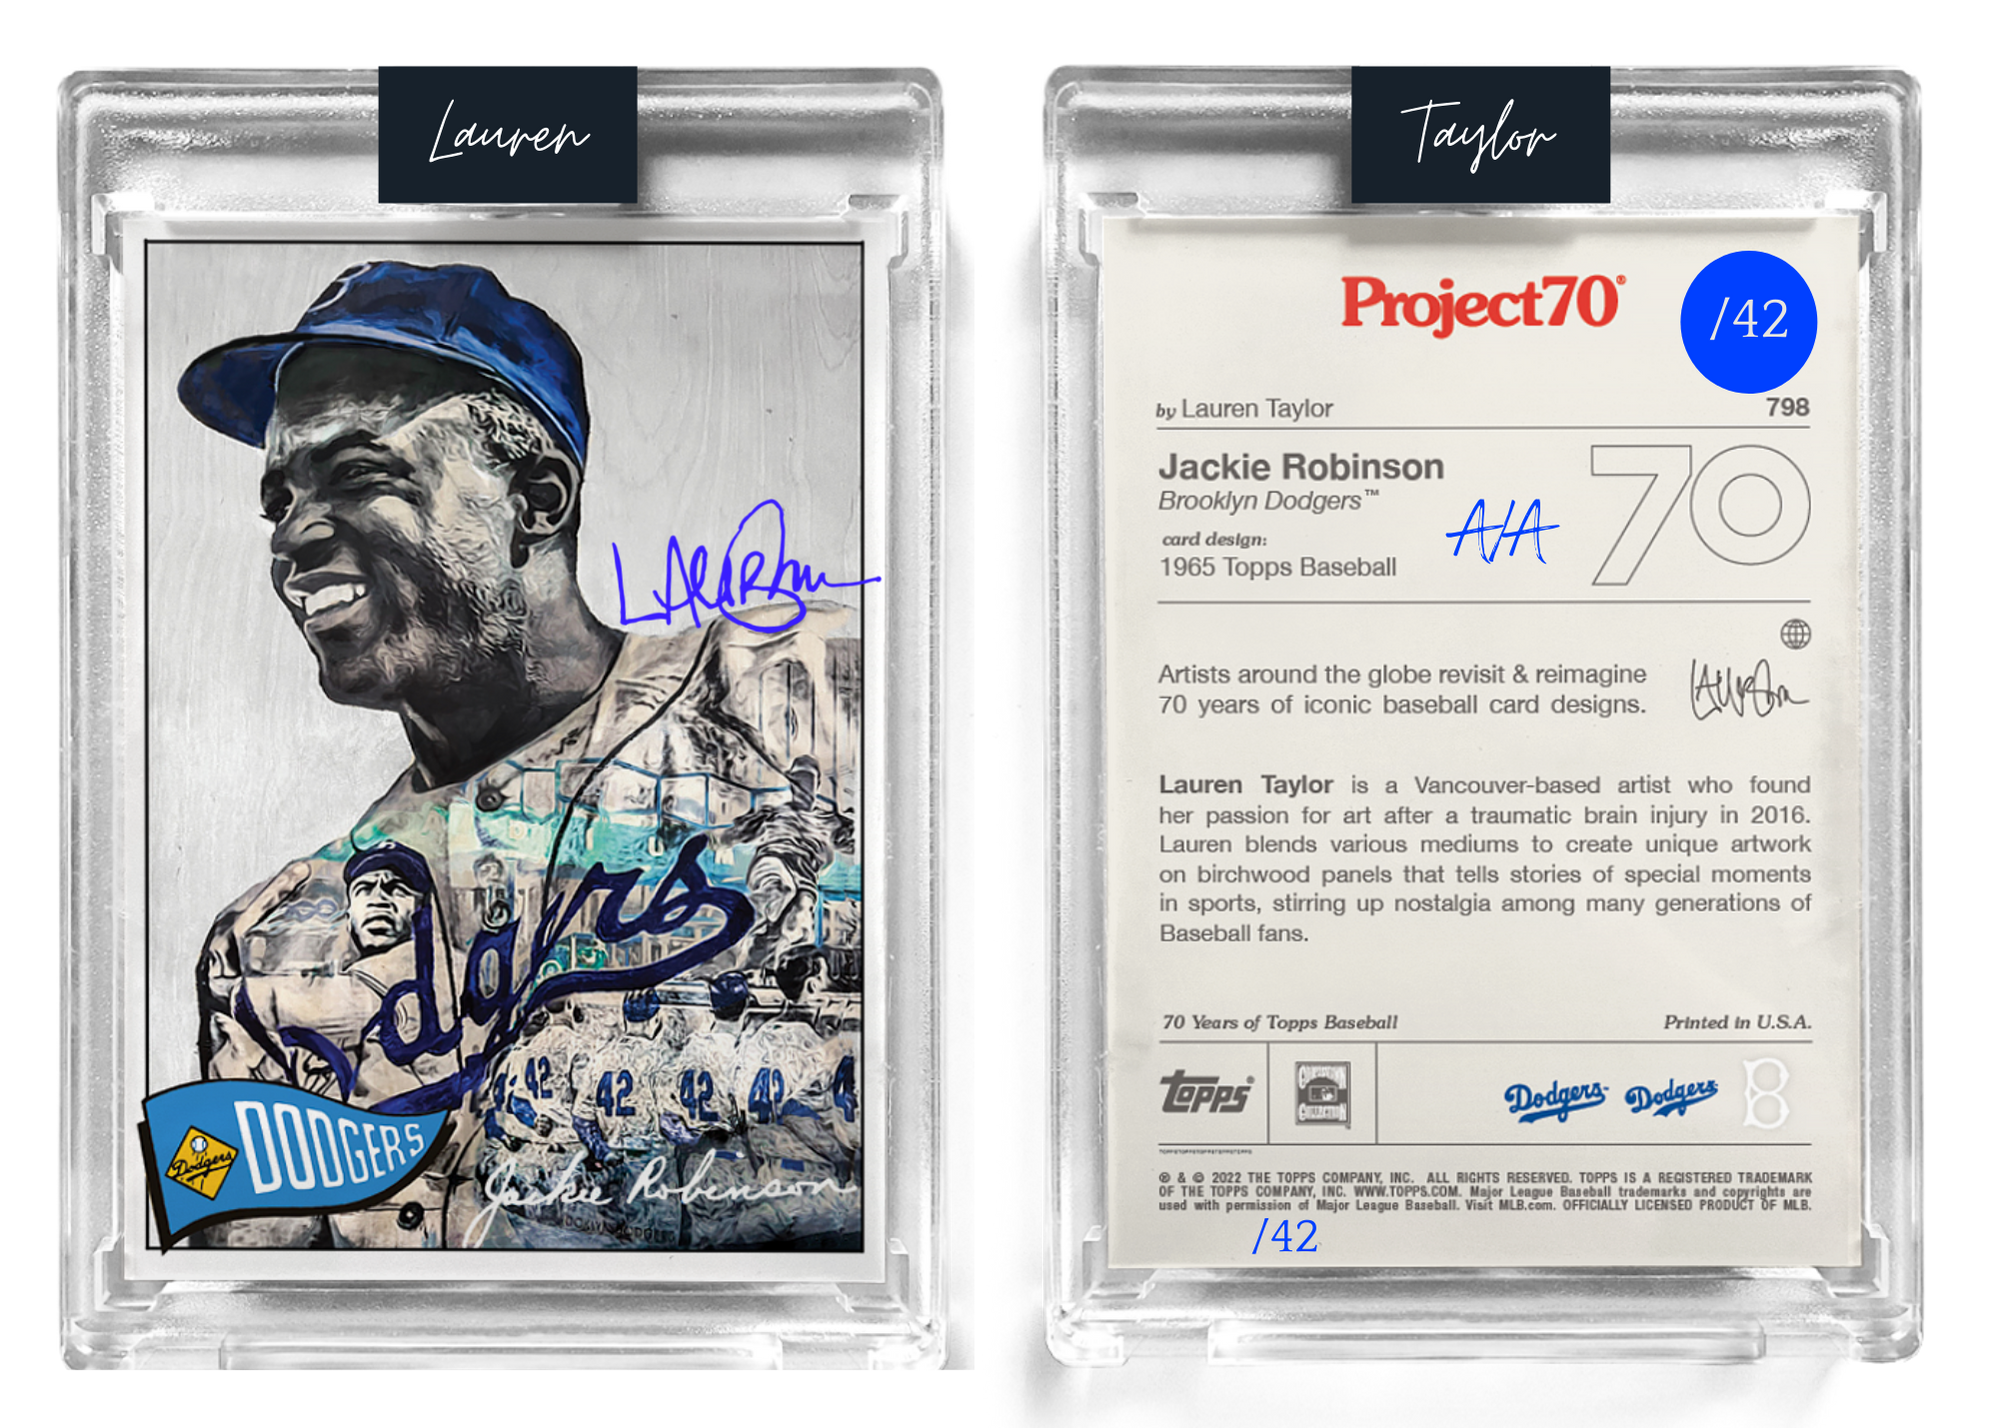 42 Dodger Blue Artist Signature - Jackie Robinson - 130pt Card #798 b